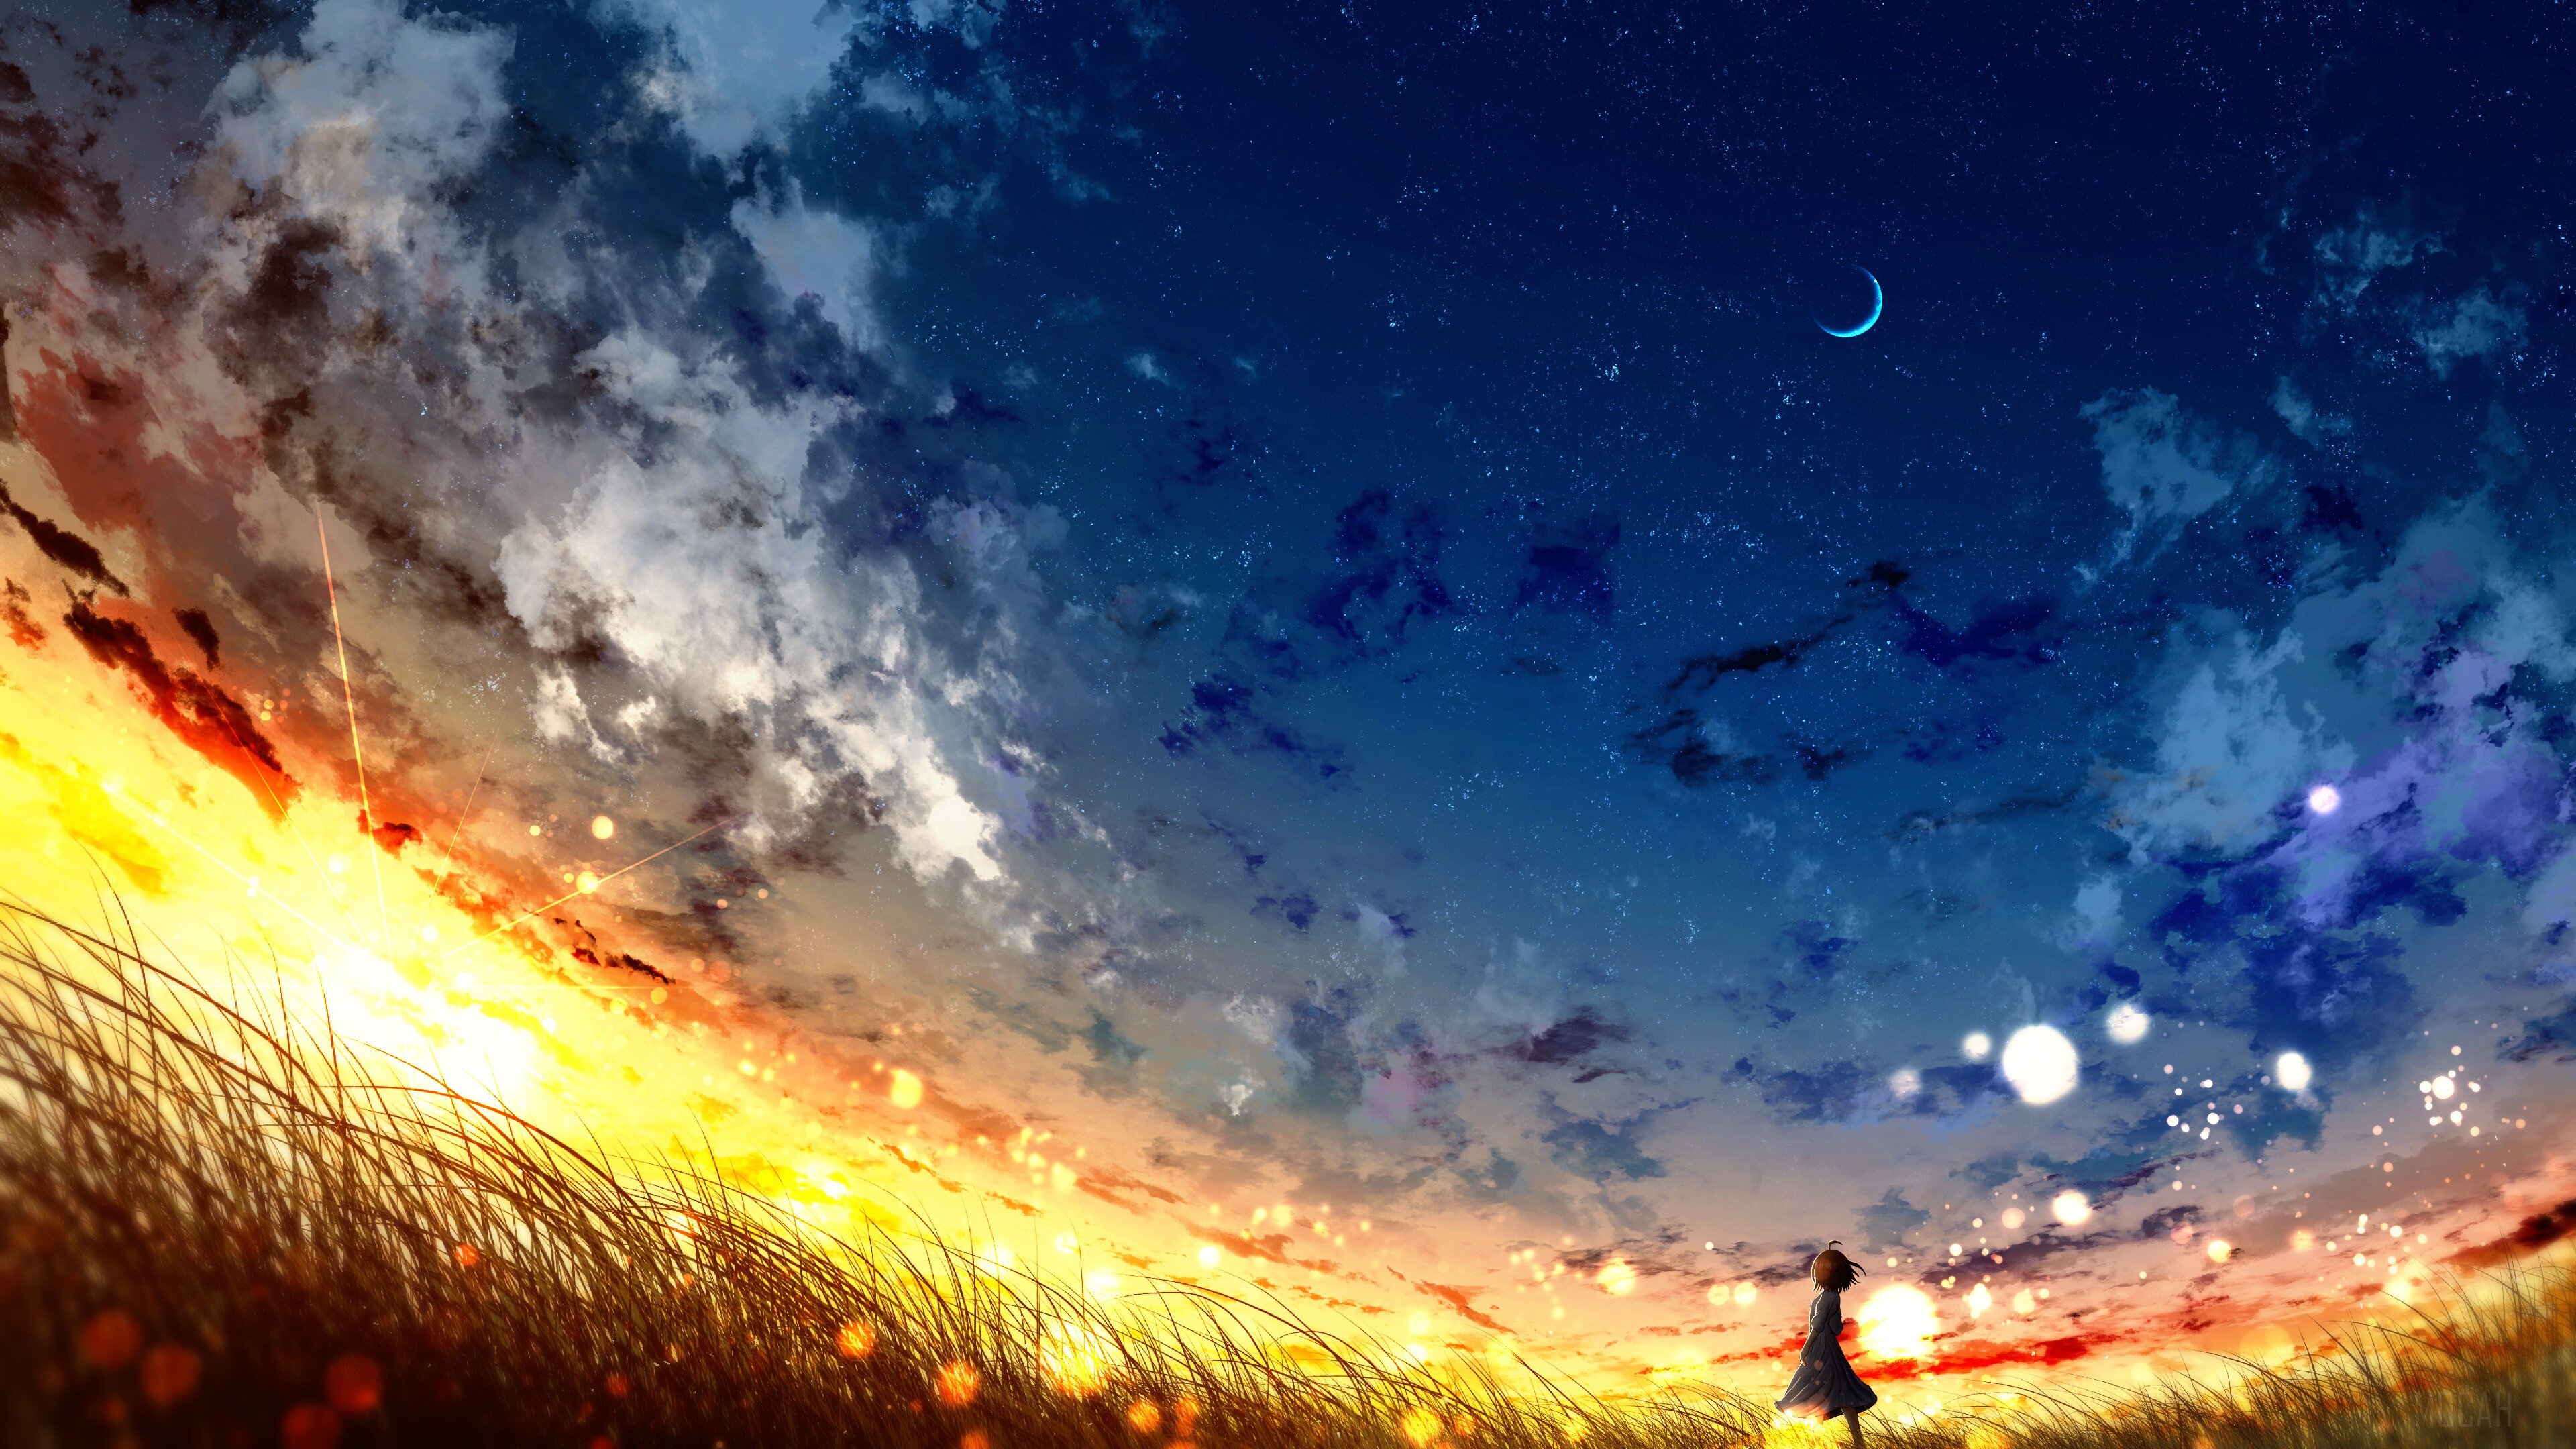 HD wallpaper night anime sky stars nebula space reflection   Wallpaper Flare